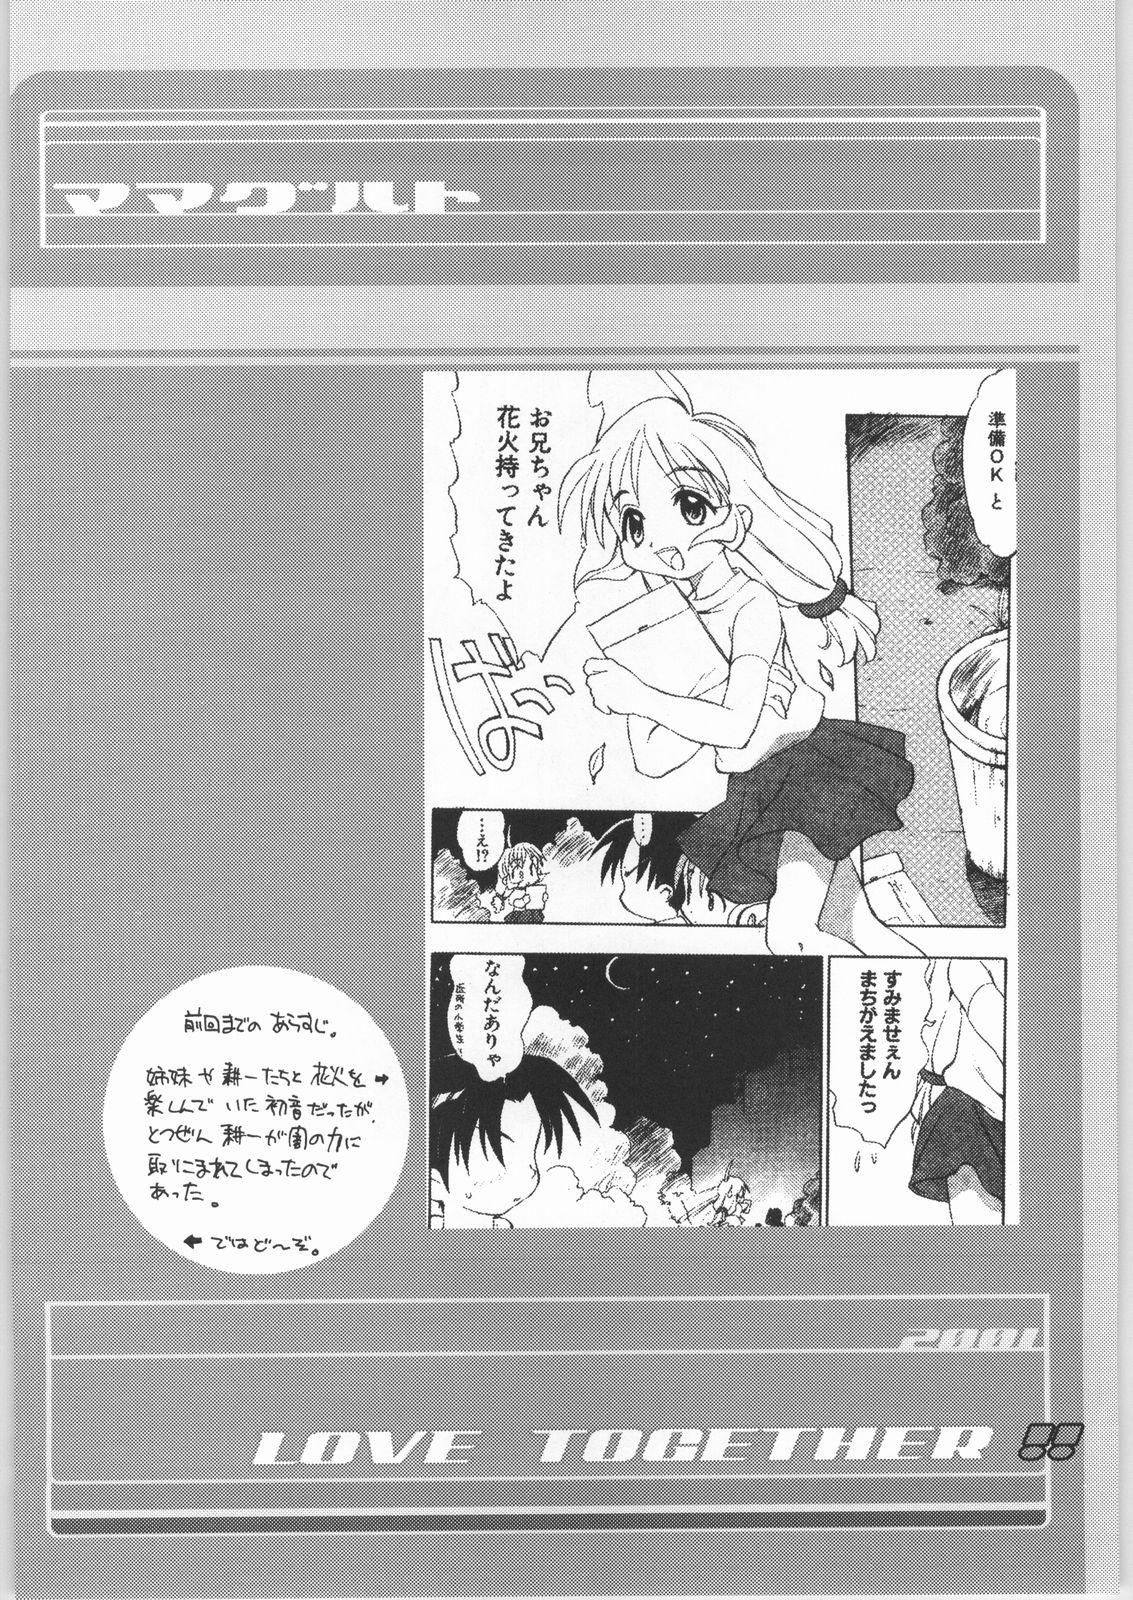 Blackmail - LOVE TOGETHER!! - Kanon Kizuato Cuckold - Page 3